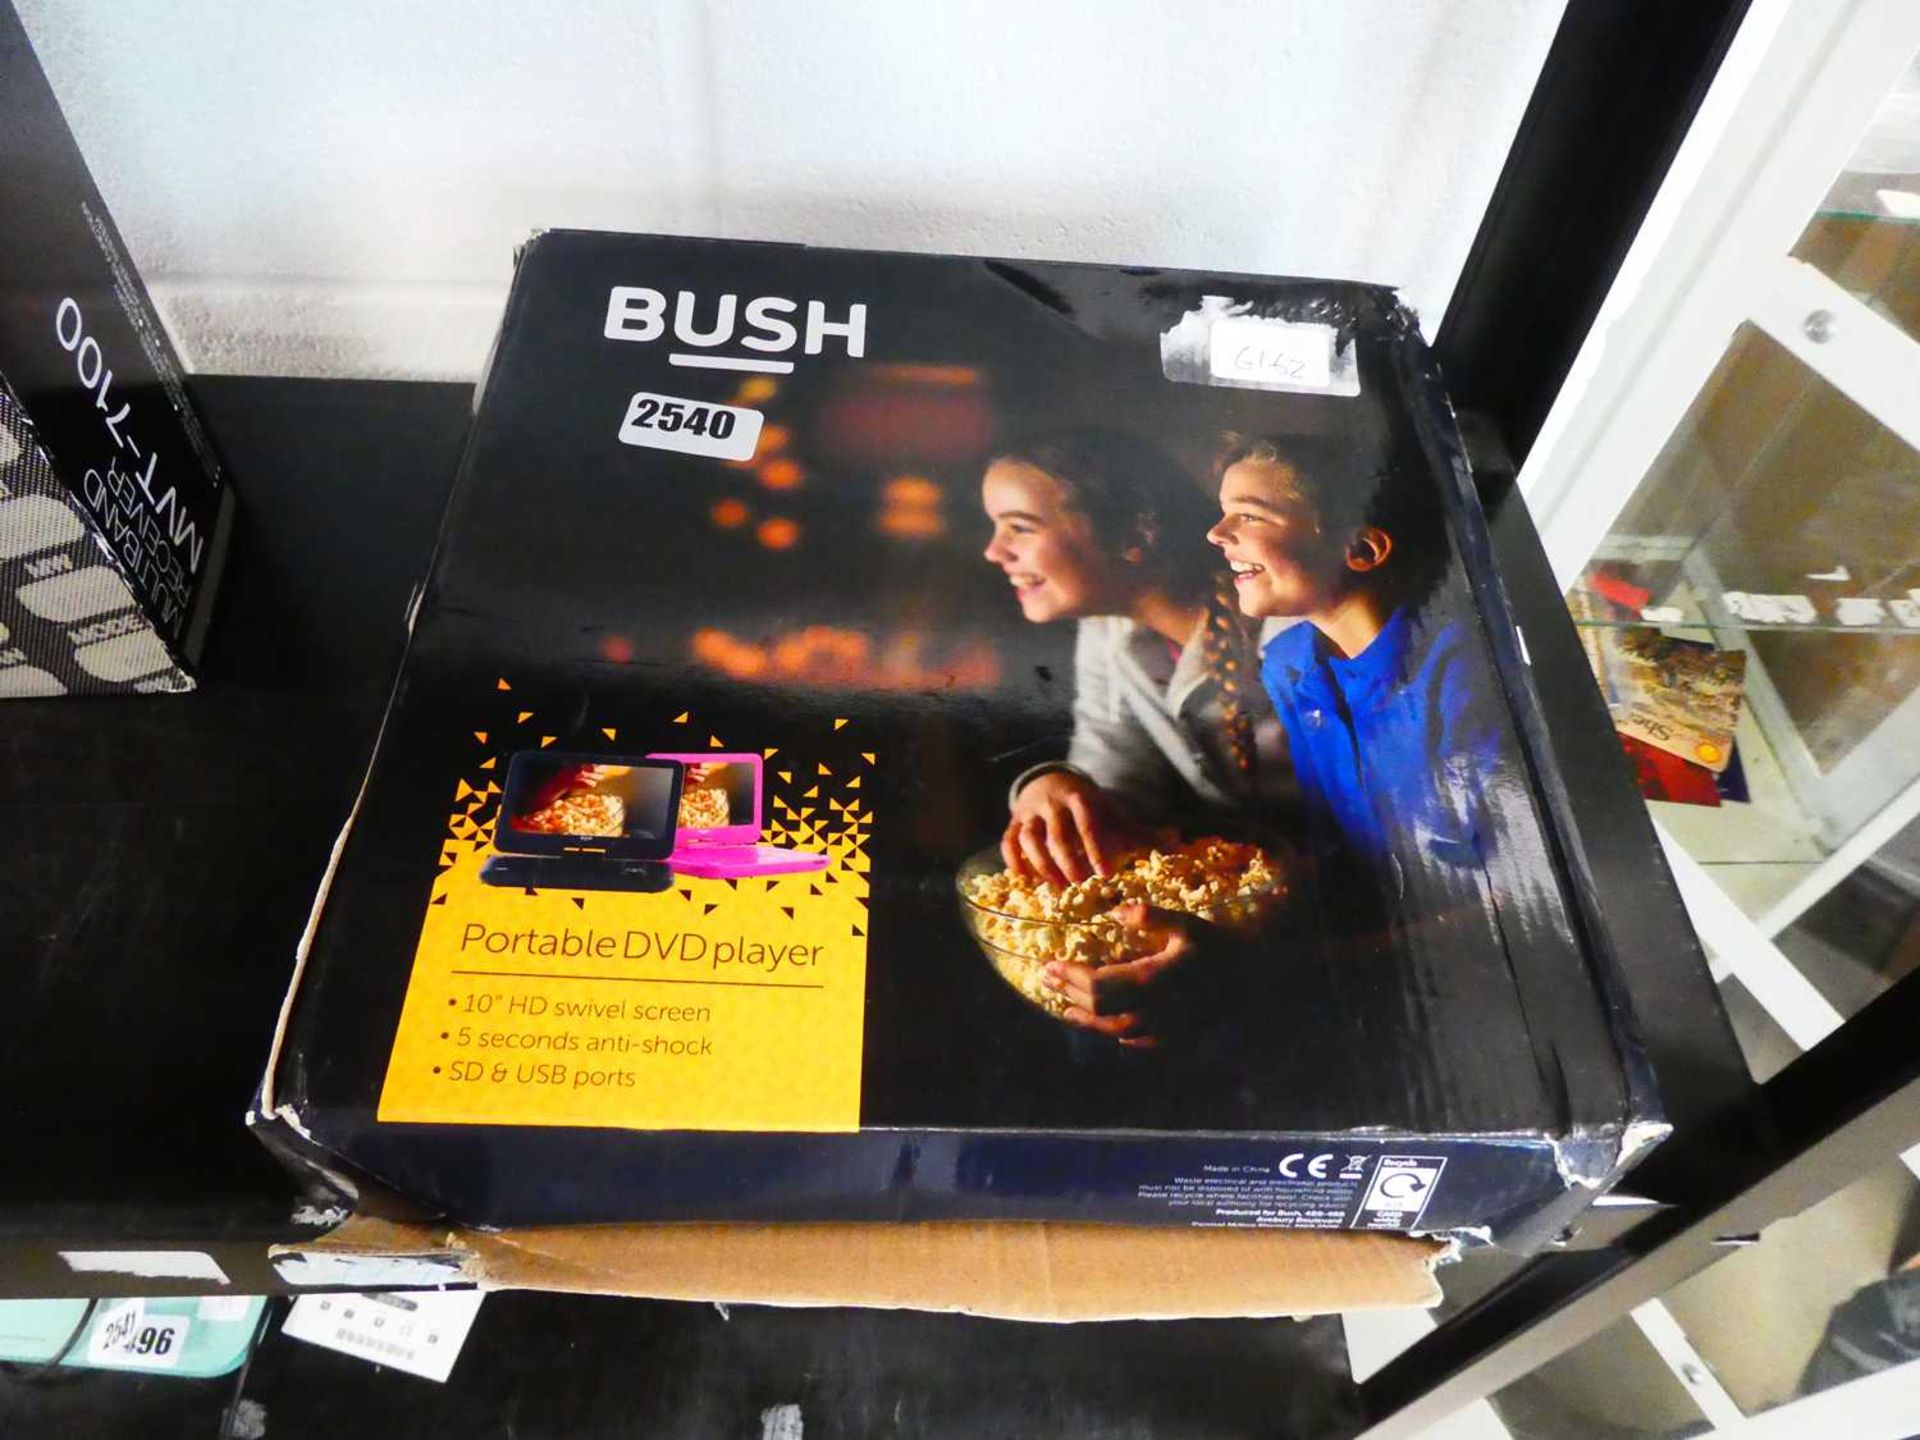 Bush portable DVD player in box